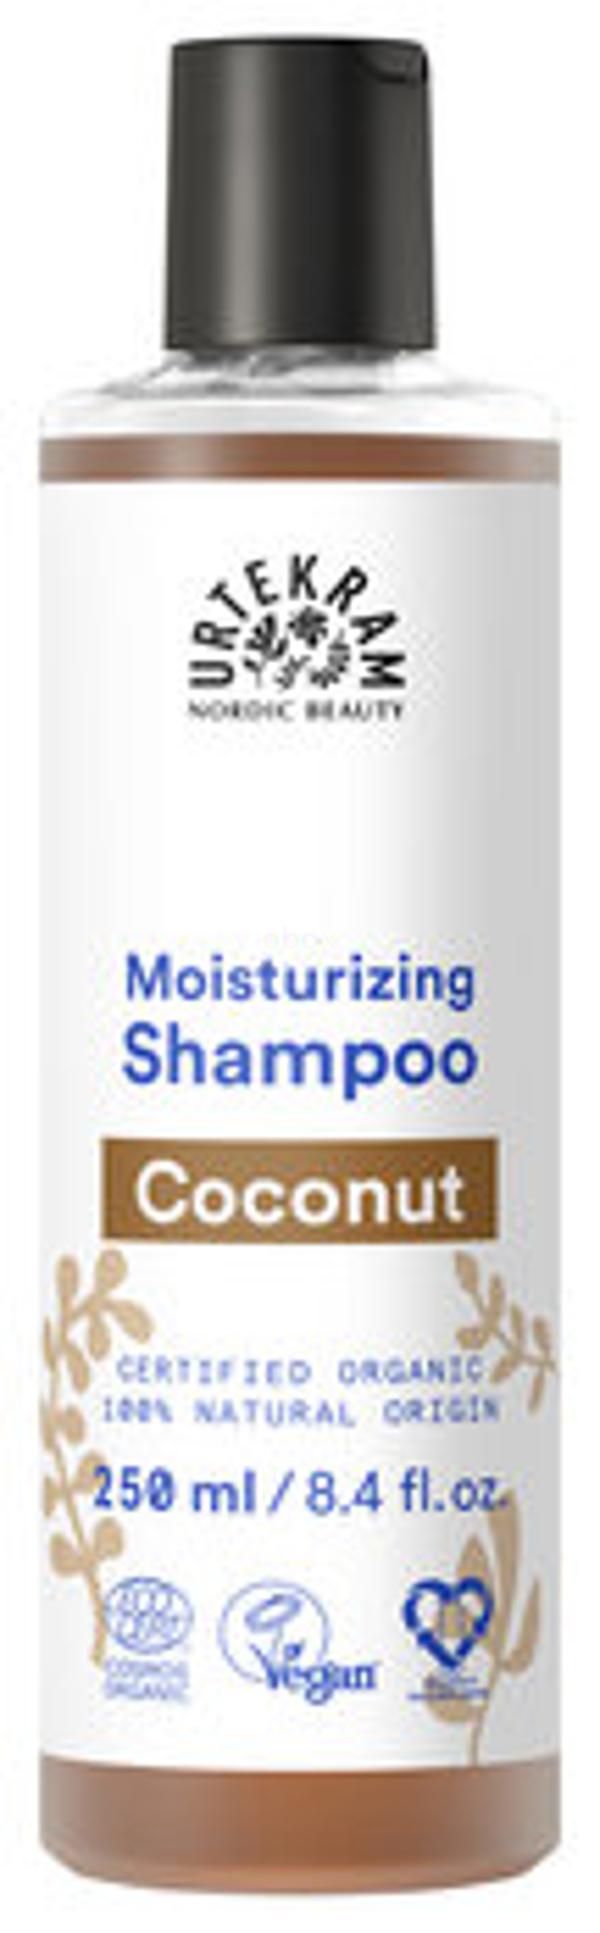 Produktfoto zu Moisturizing Shampoo Coconut